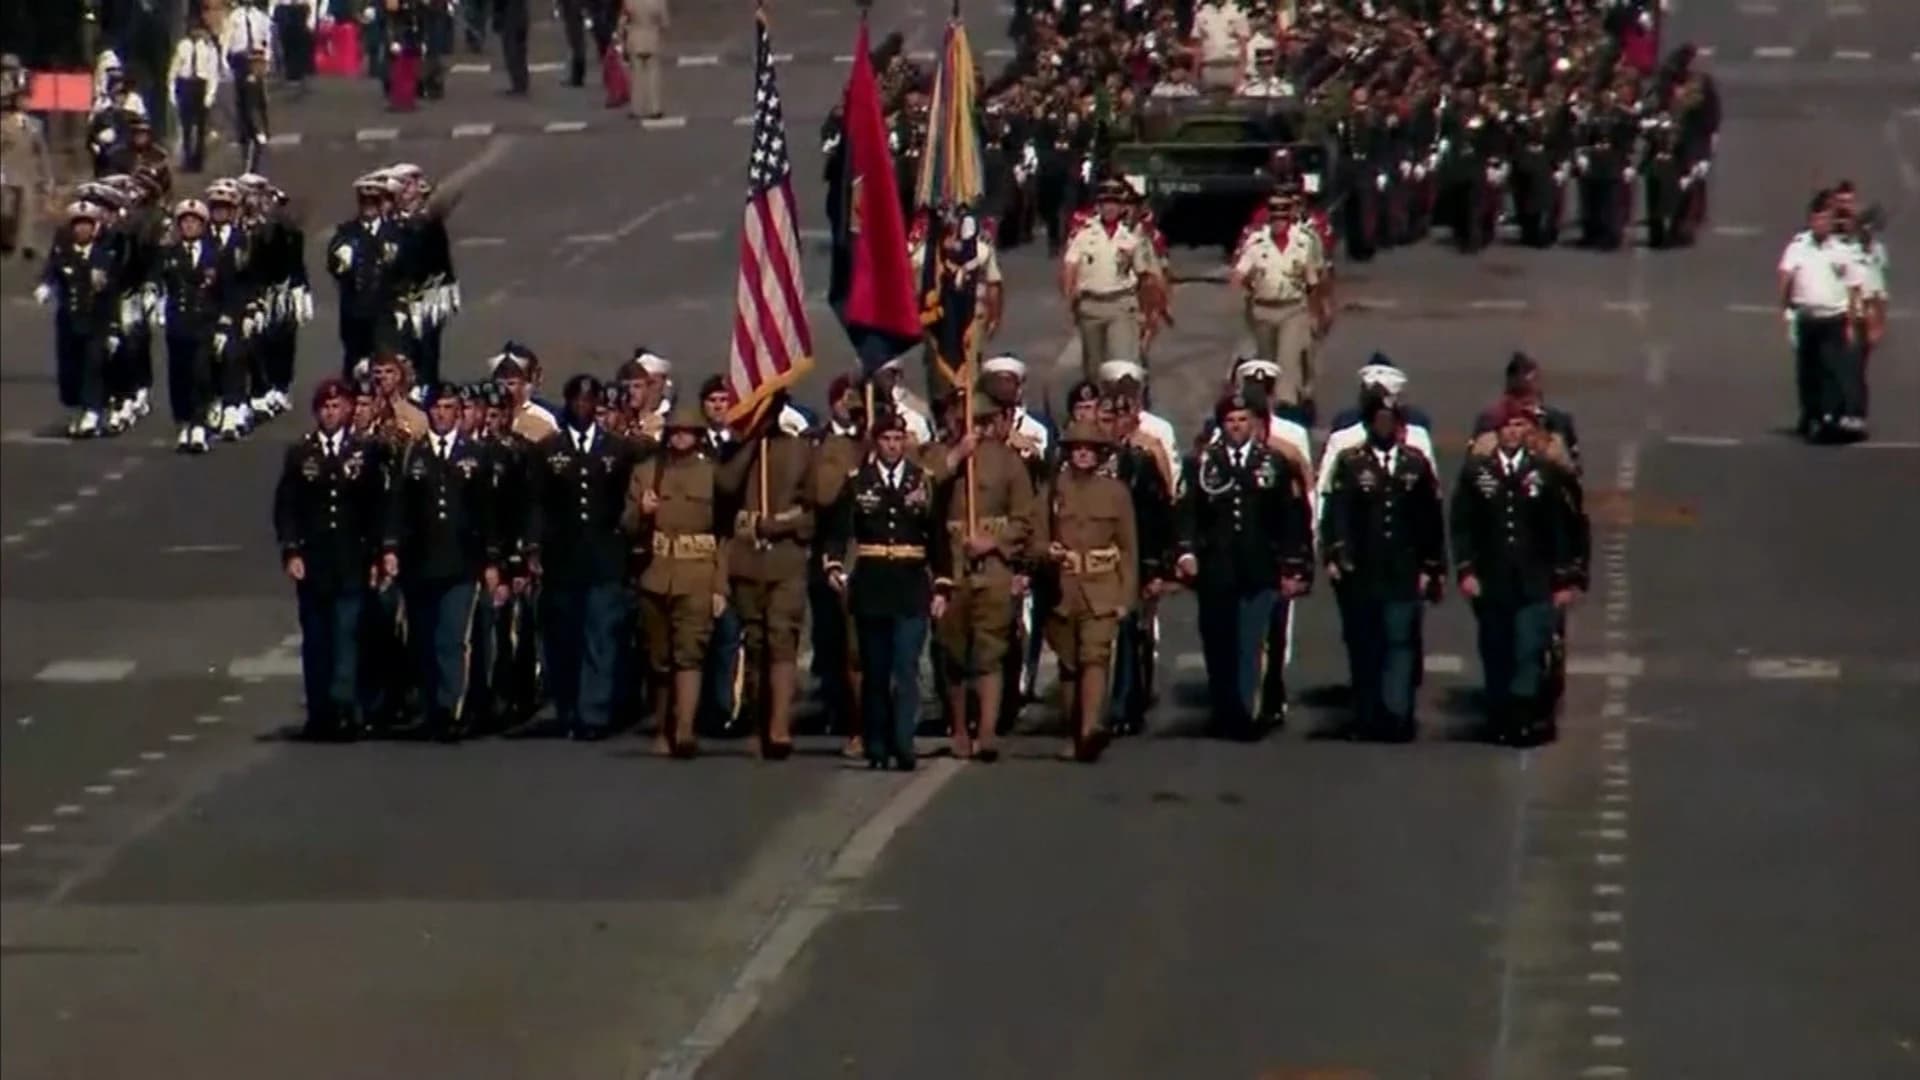 Pentagon delays Trump's veterans parade until at least 2019